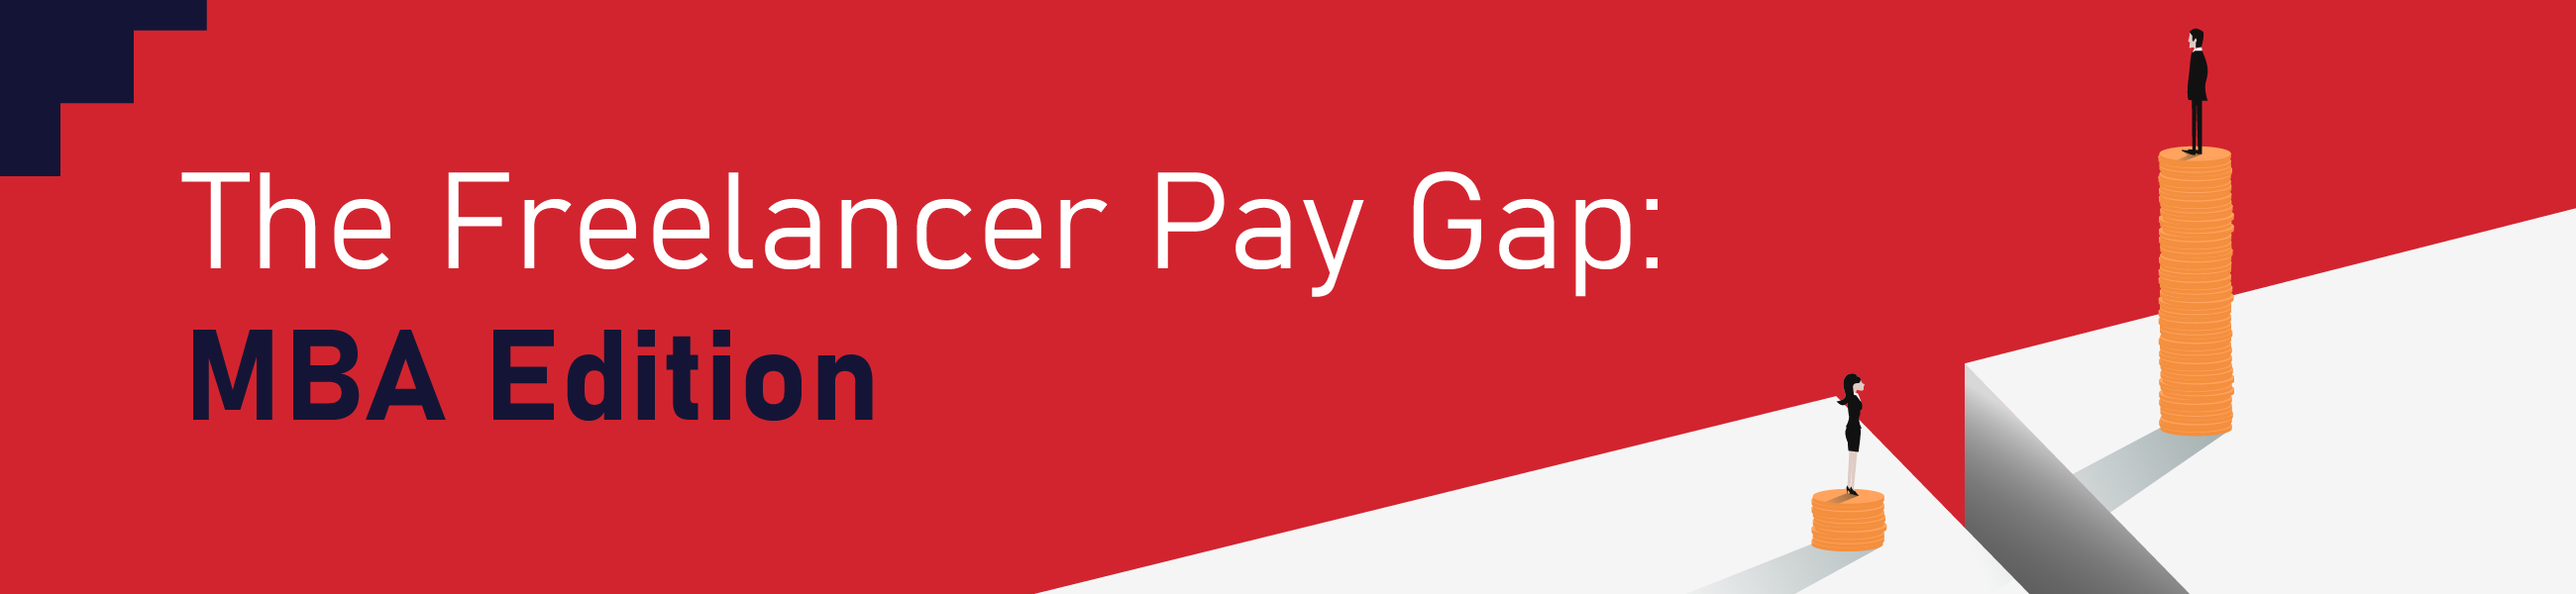 the freelancer pay gap MBA edition